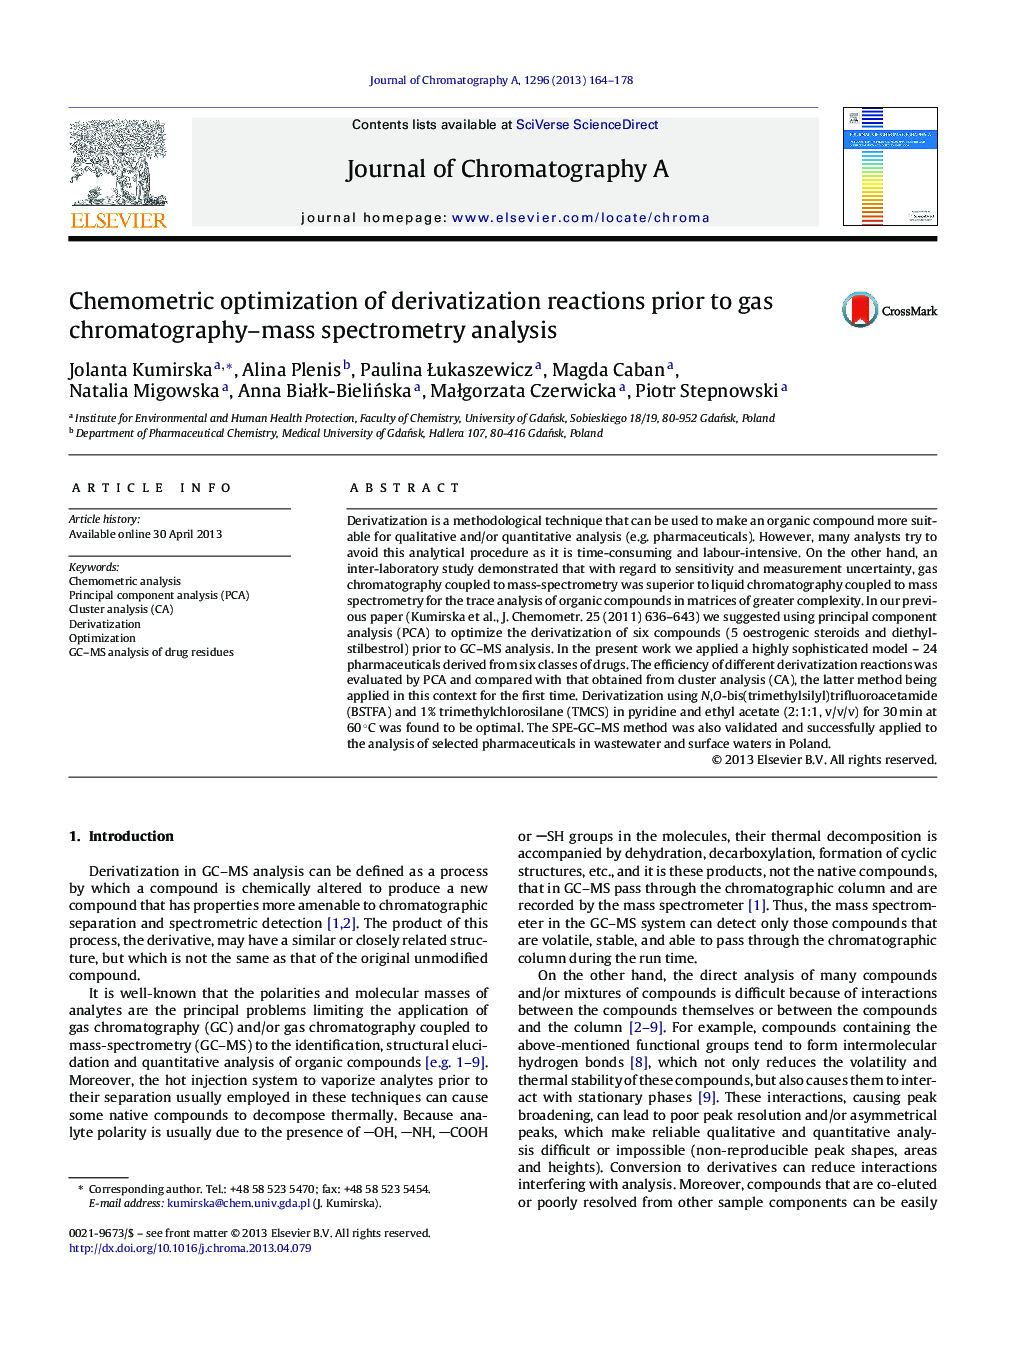 Chemometric optimization of derivatization reactions prior to gas chromatography–mass spectrometry analysis